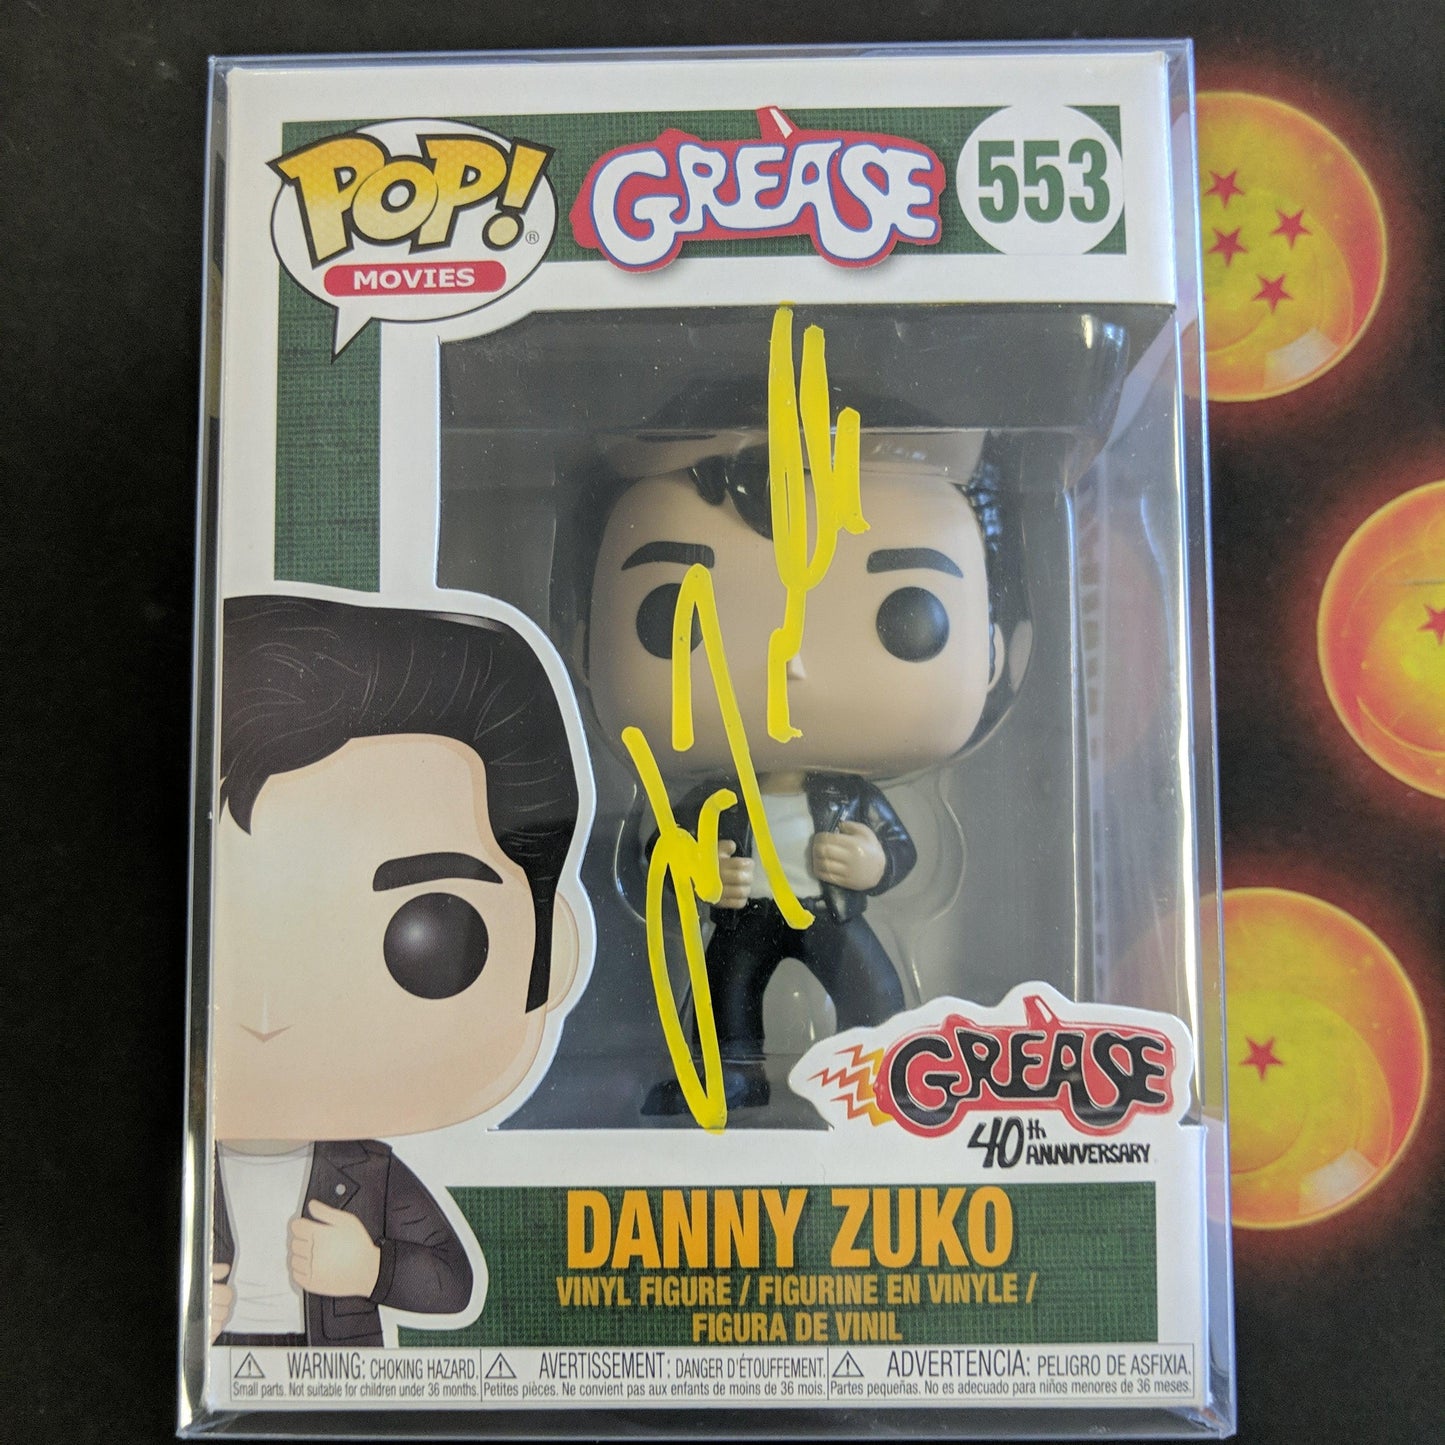 Pop Movies: Grease - Danny Zuko 553 Signed